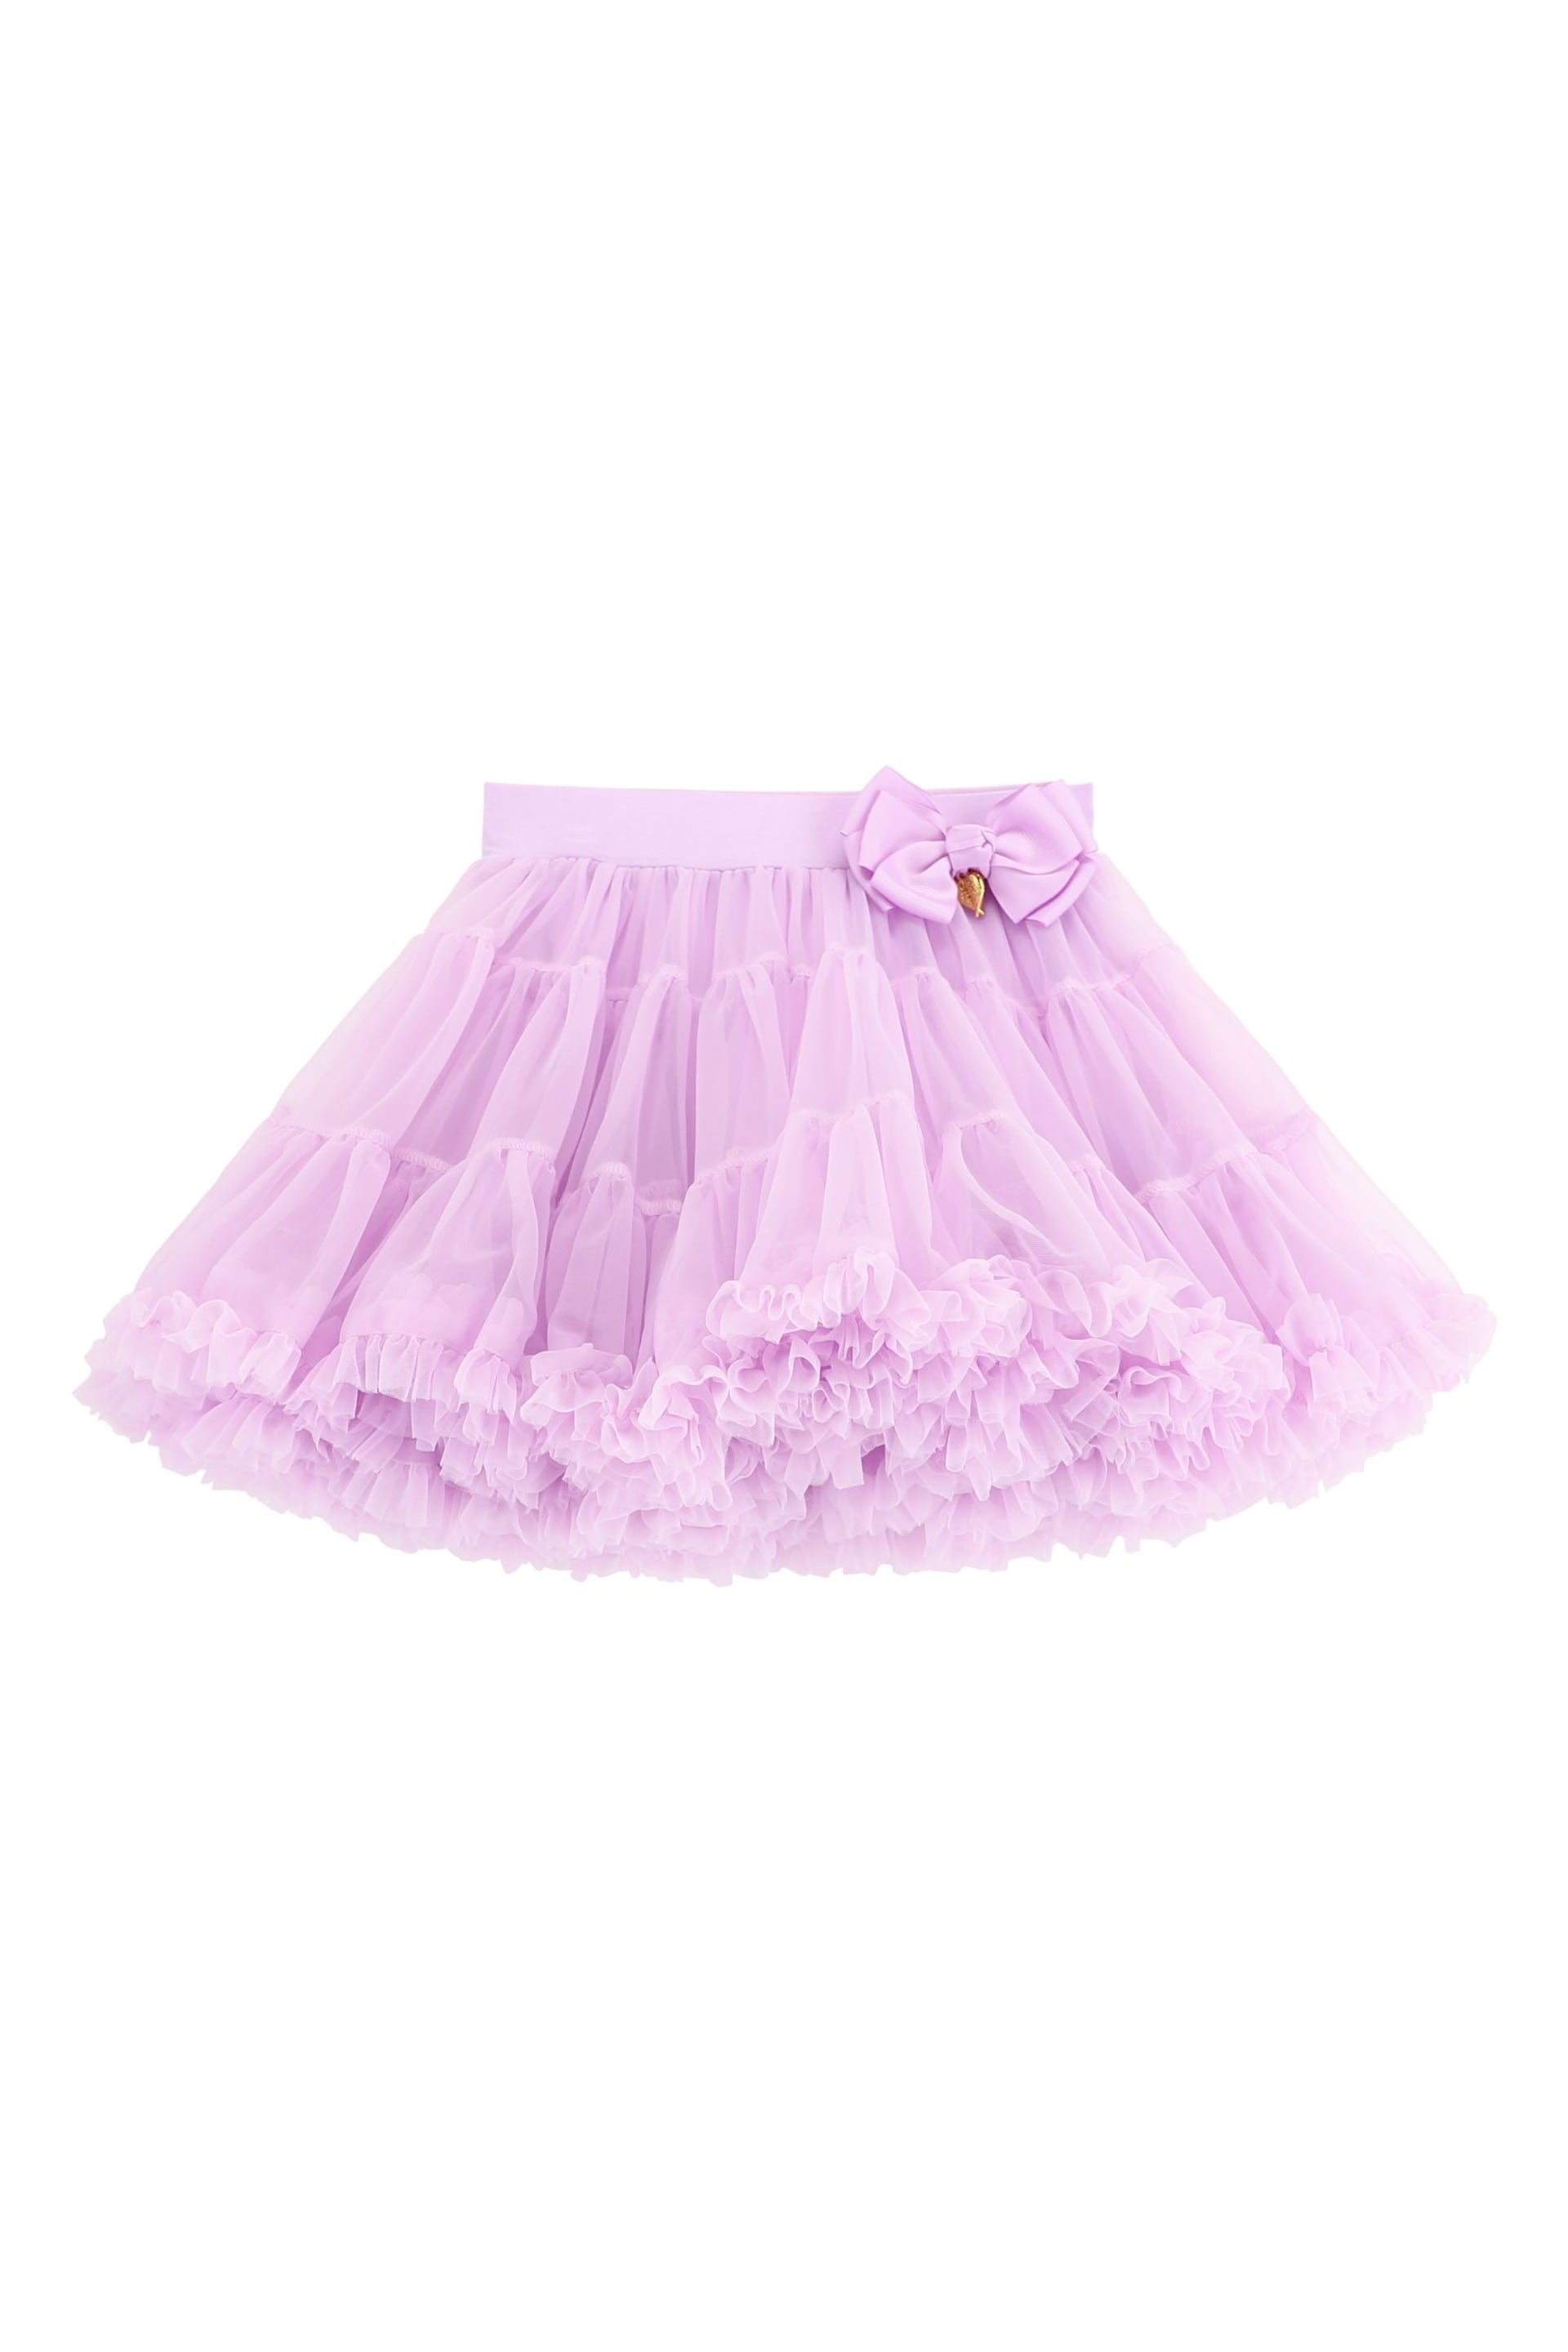 Angels Face Purple Pixie Tutu Skirt - Image 2 of 3